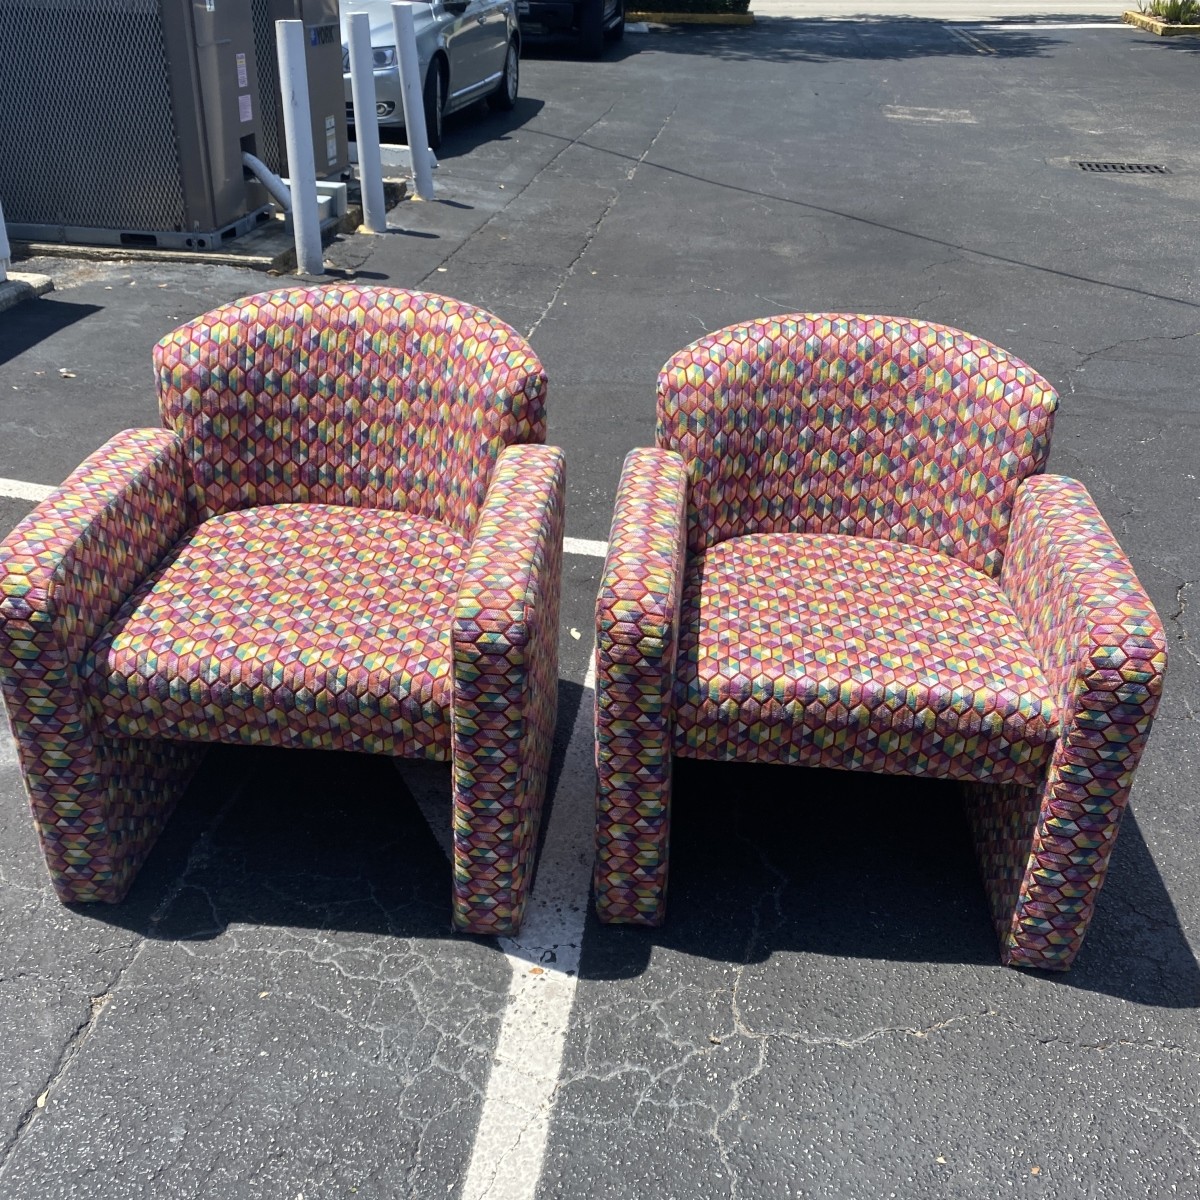 Club Chairs